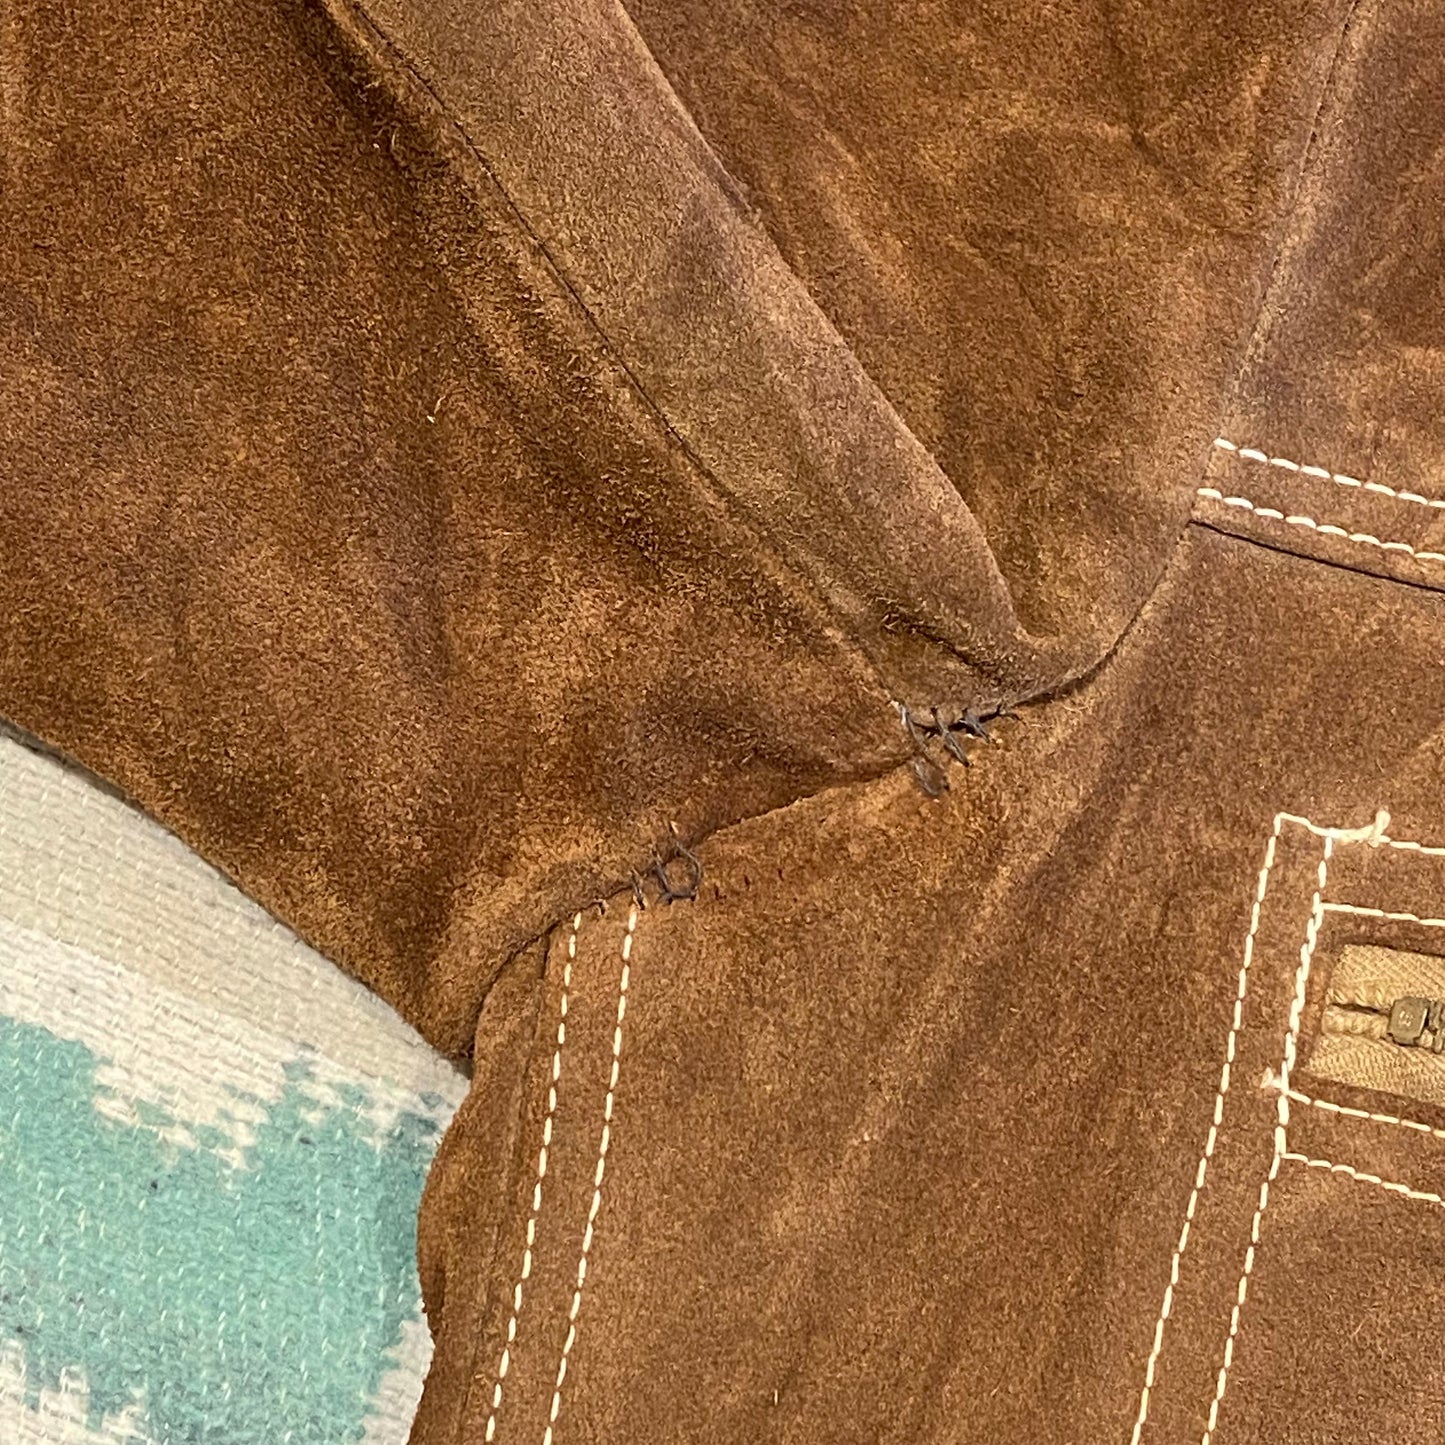 1970s Skalar Brown Leather Suede 4 Pocket Jacket Made in USA Size M/L